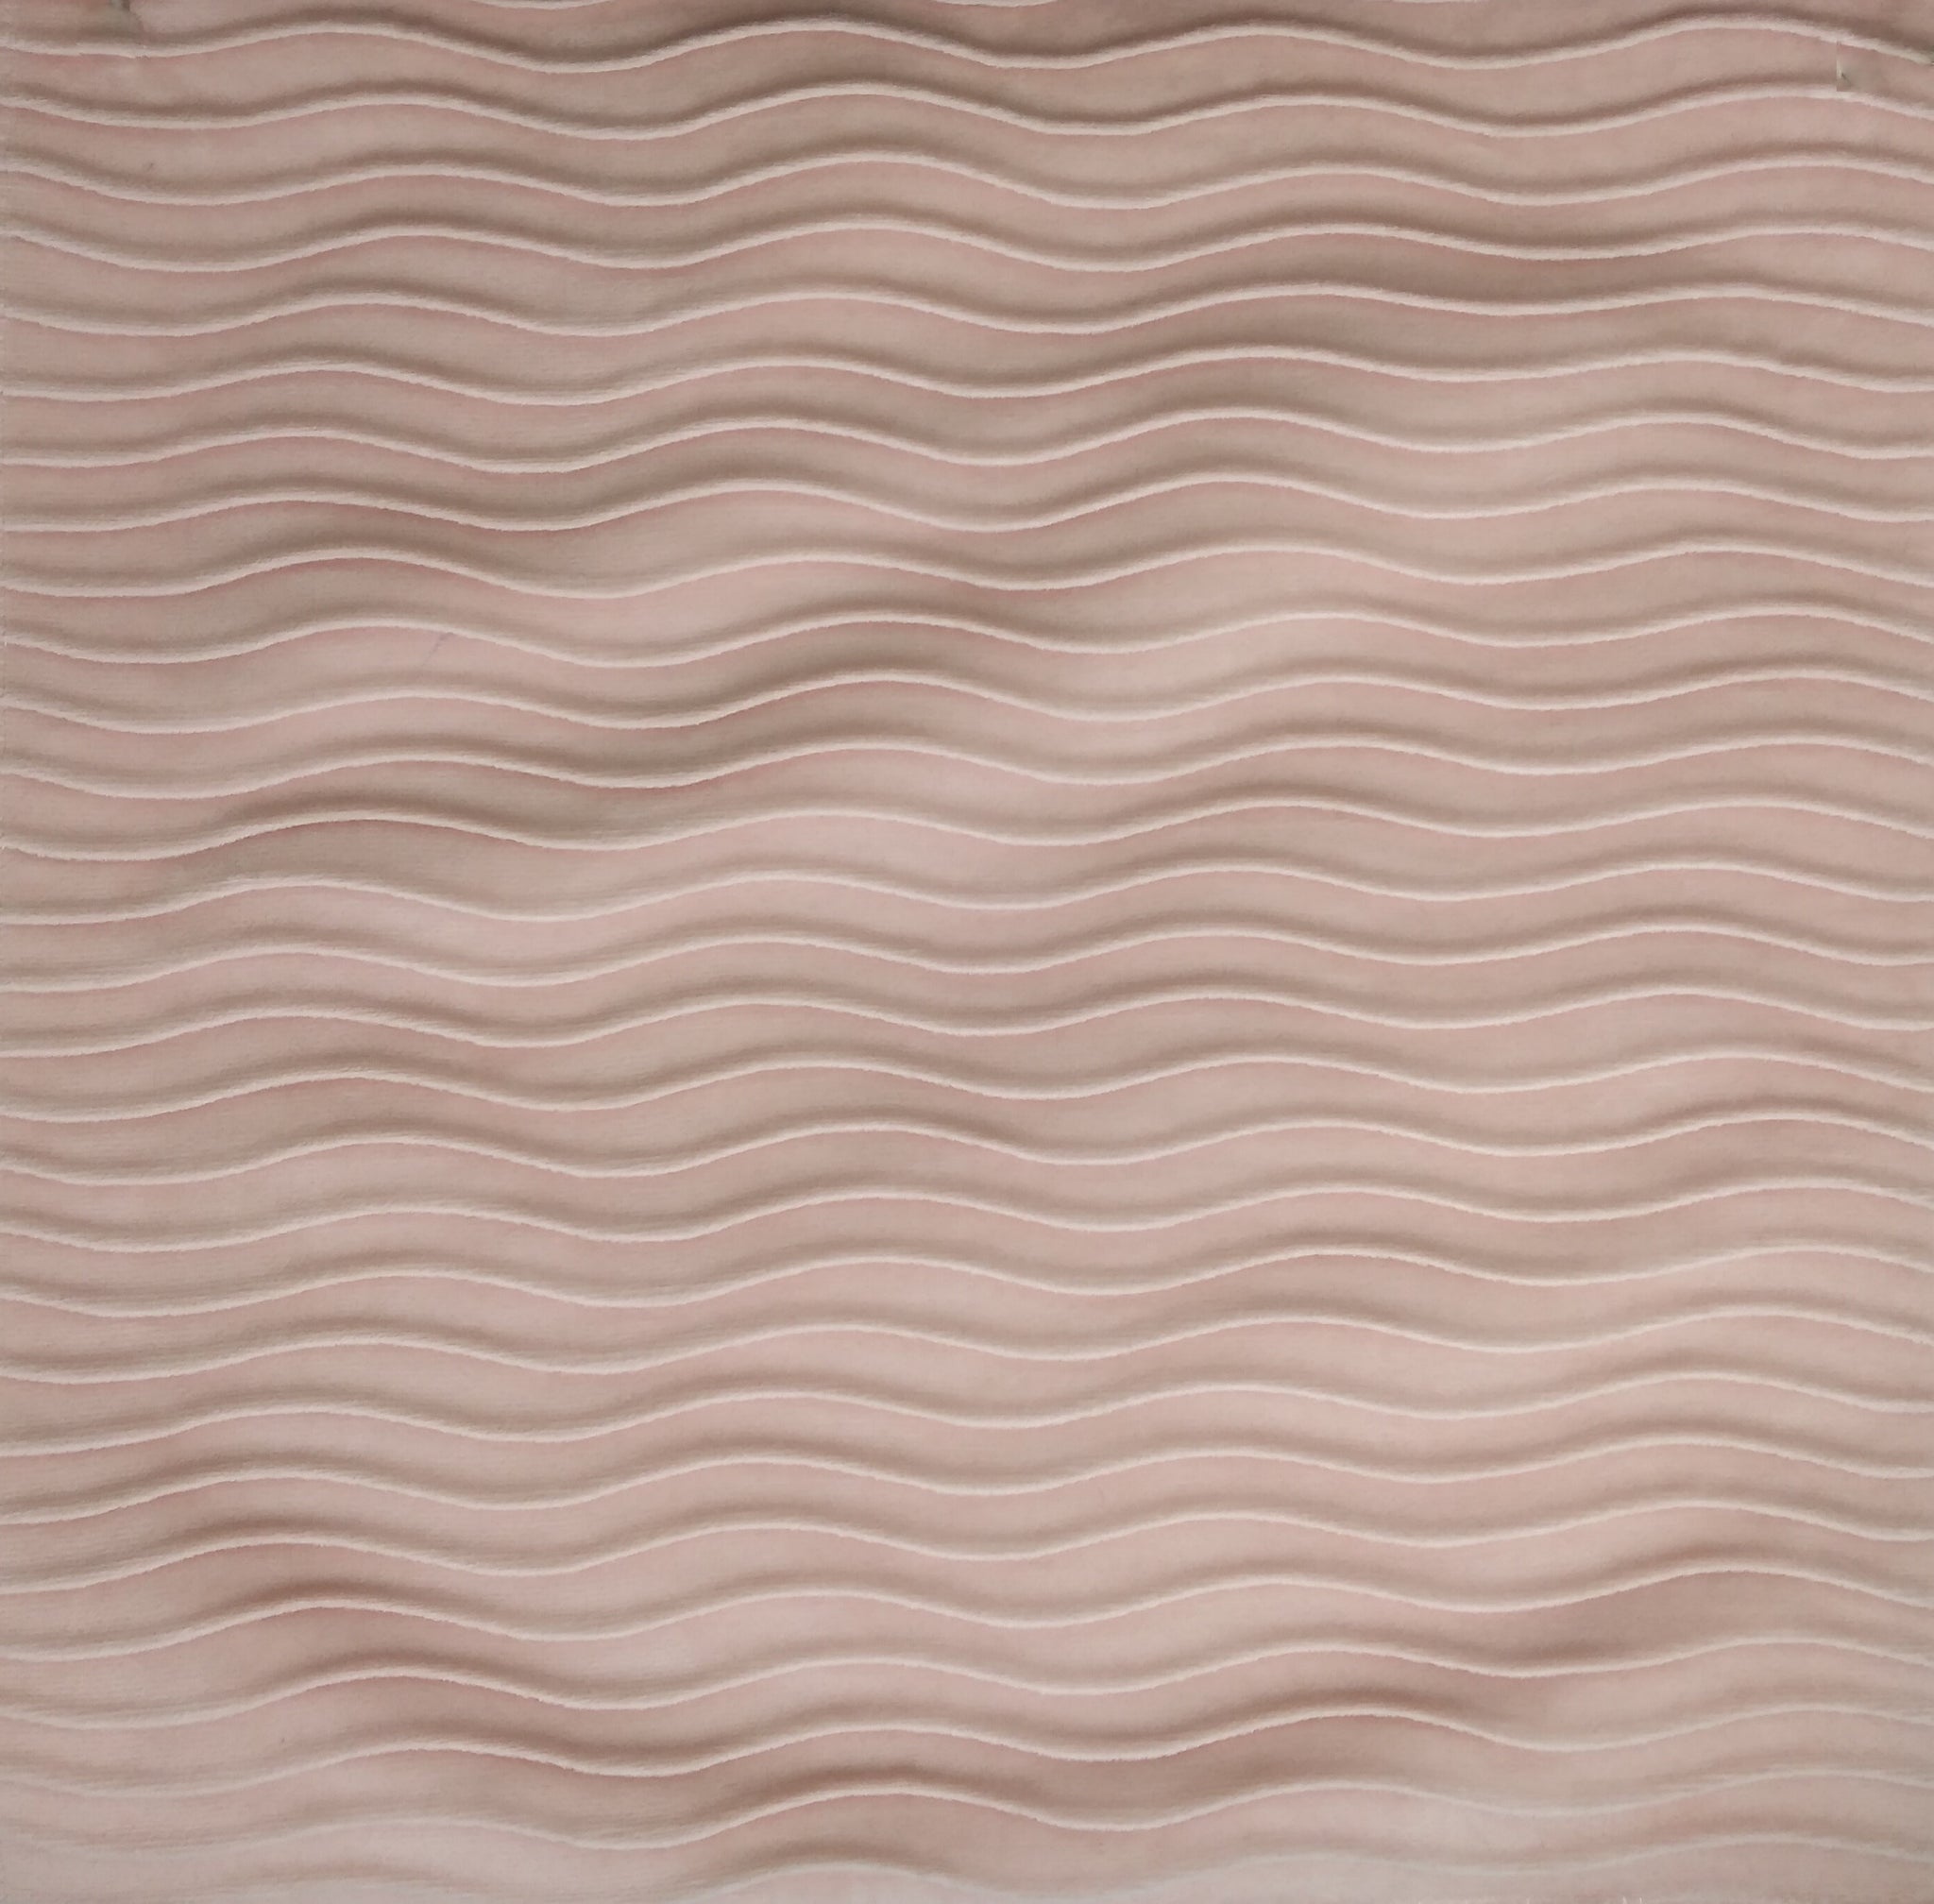 Raina Velvet - Petal; Wavy Velvet Fabric in 7 Colour Ways Available in 1/2 Yard Cuts